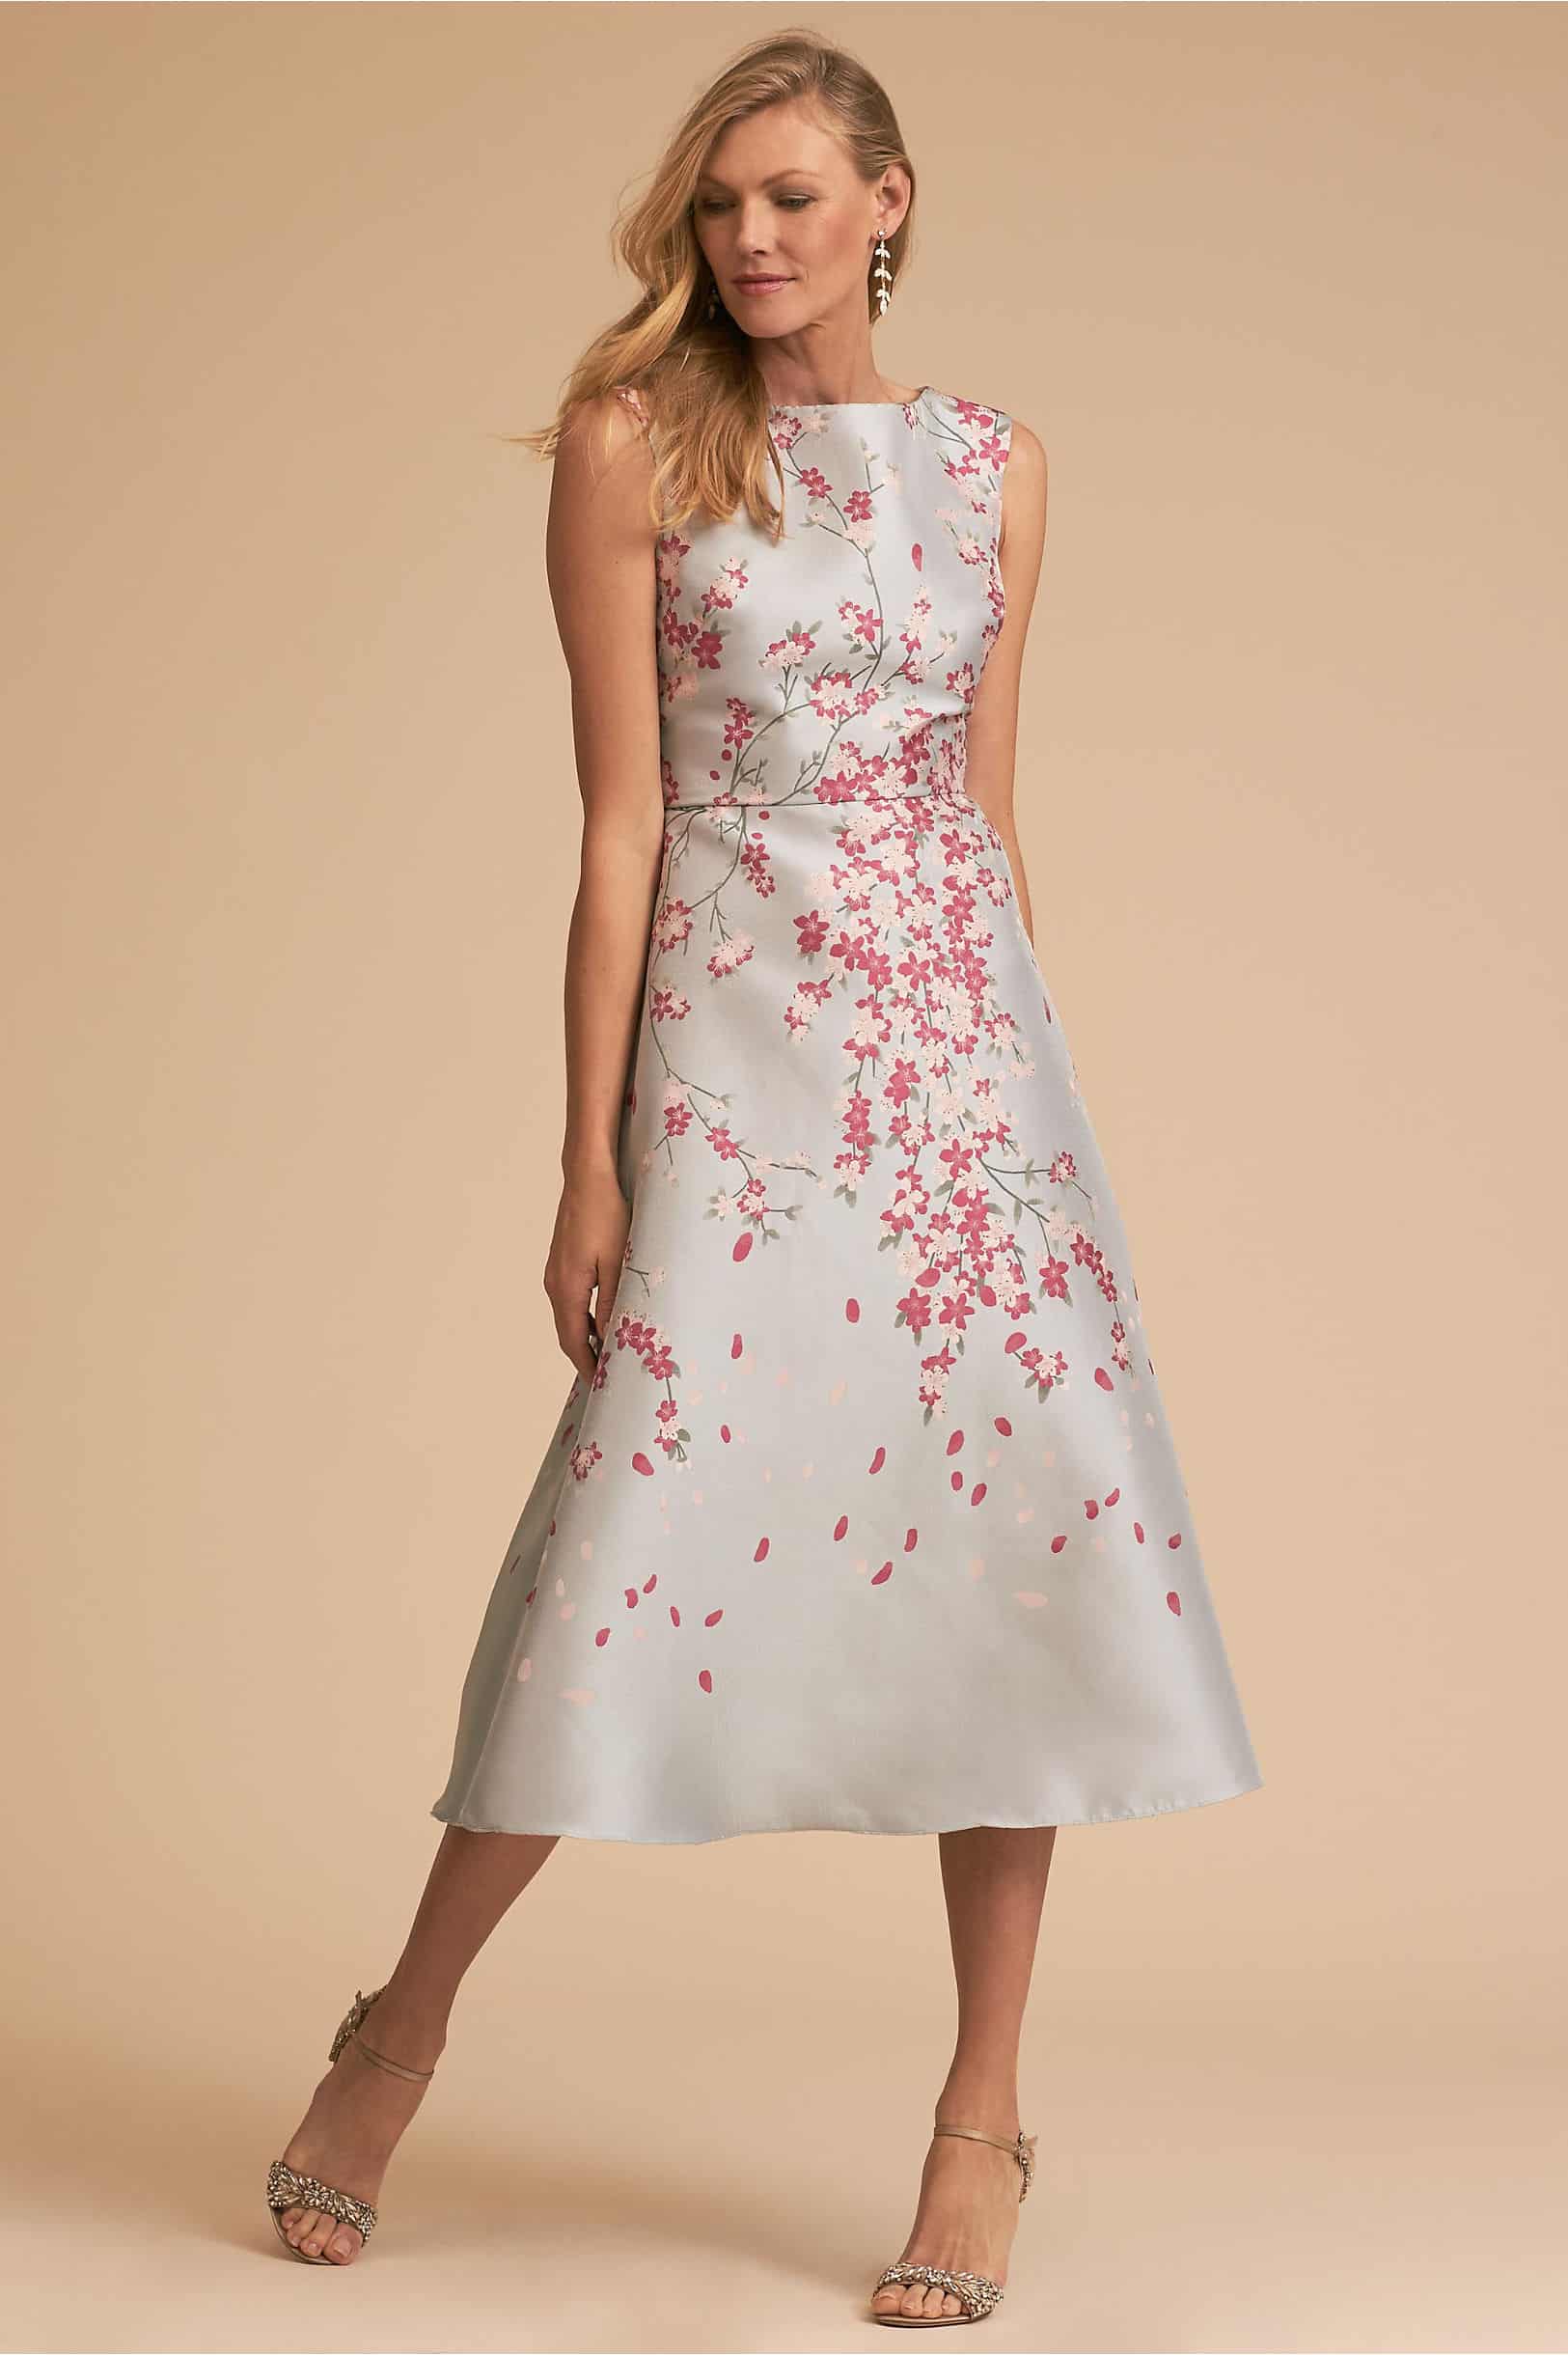 Cherry Blossom Wedding Ideas and Inspiration | Dress for the Wedding